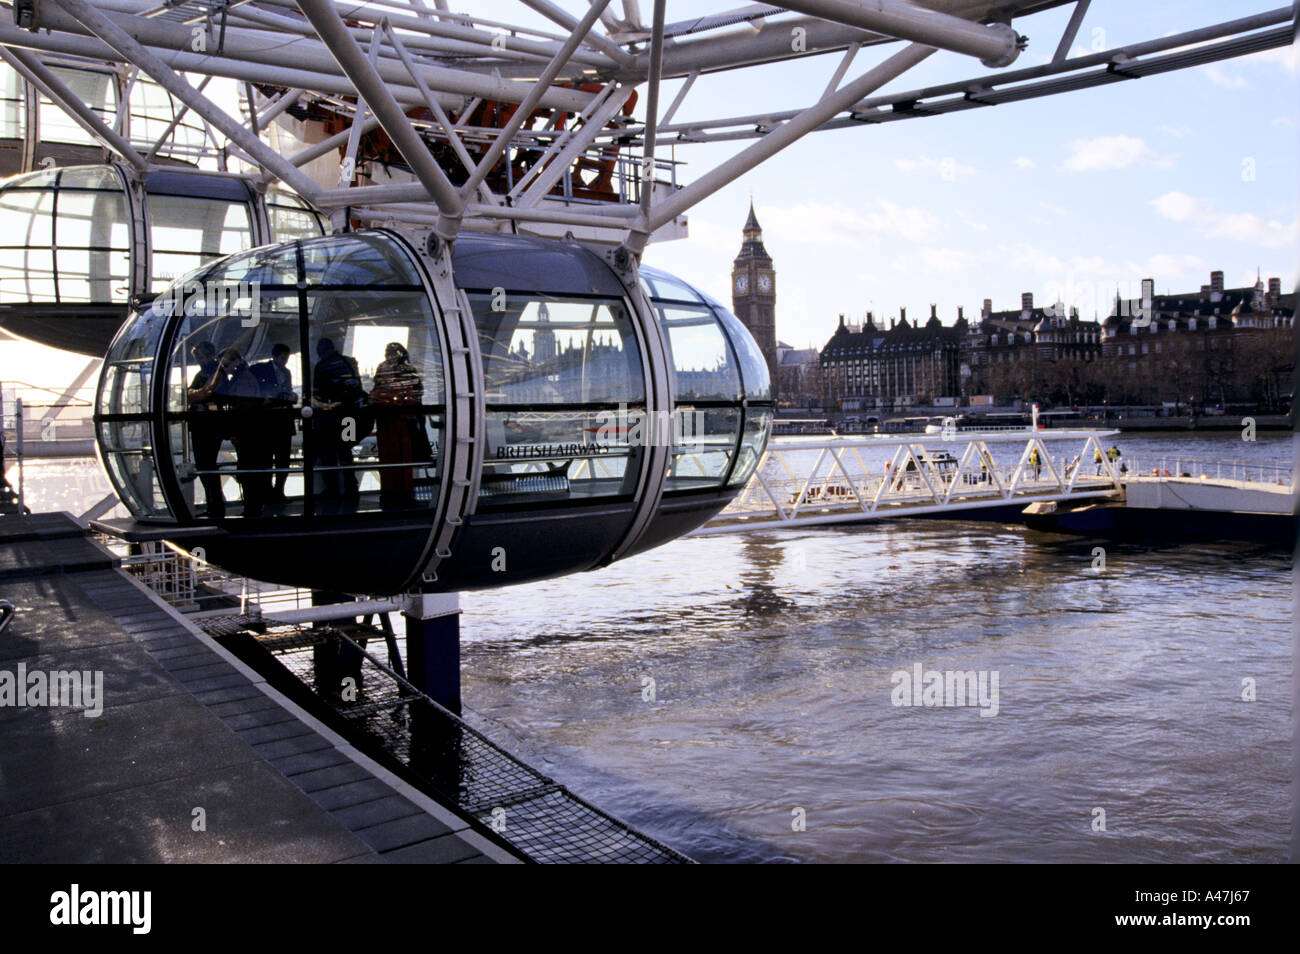 london eye opens the british airways london eye southbank river thames london 2 2 00 2000 Stock Photo